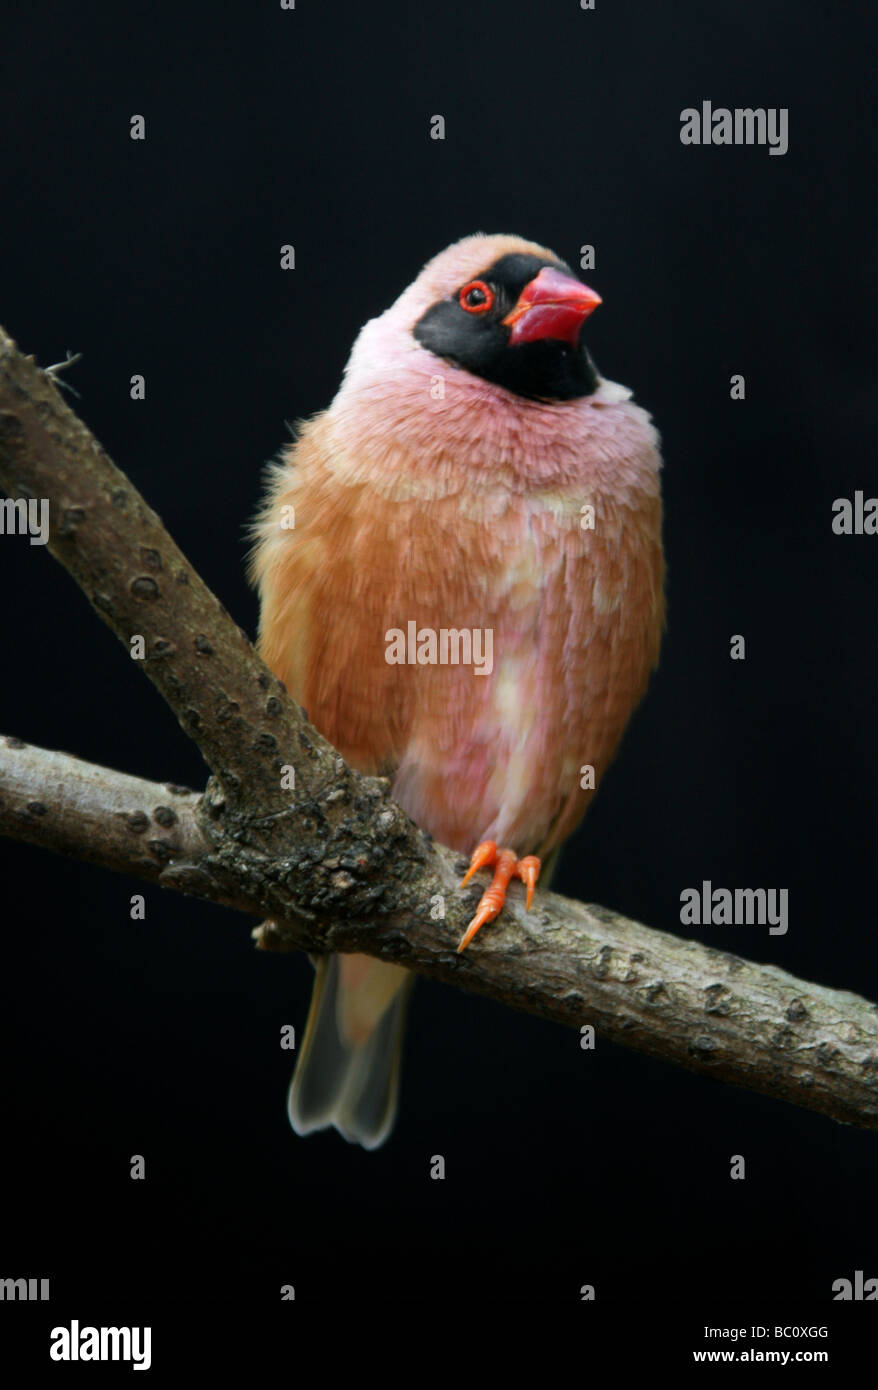 Red-billed Quelea Bird, Quelea quelea, Ploceidae Stock Photo